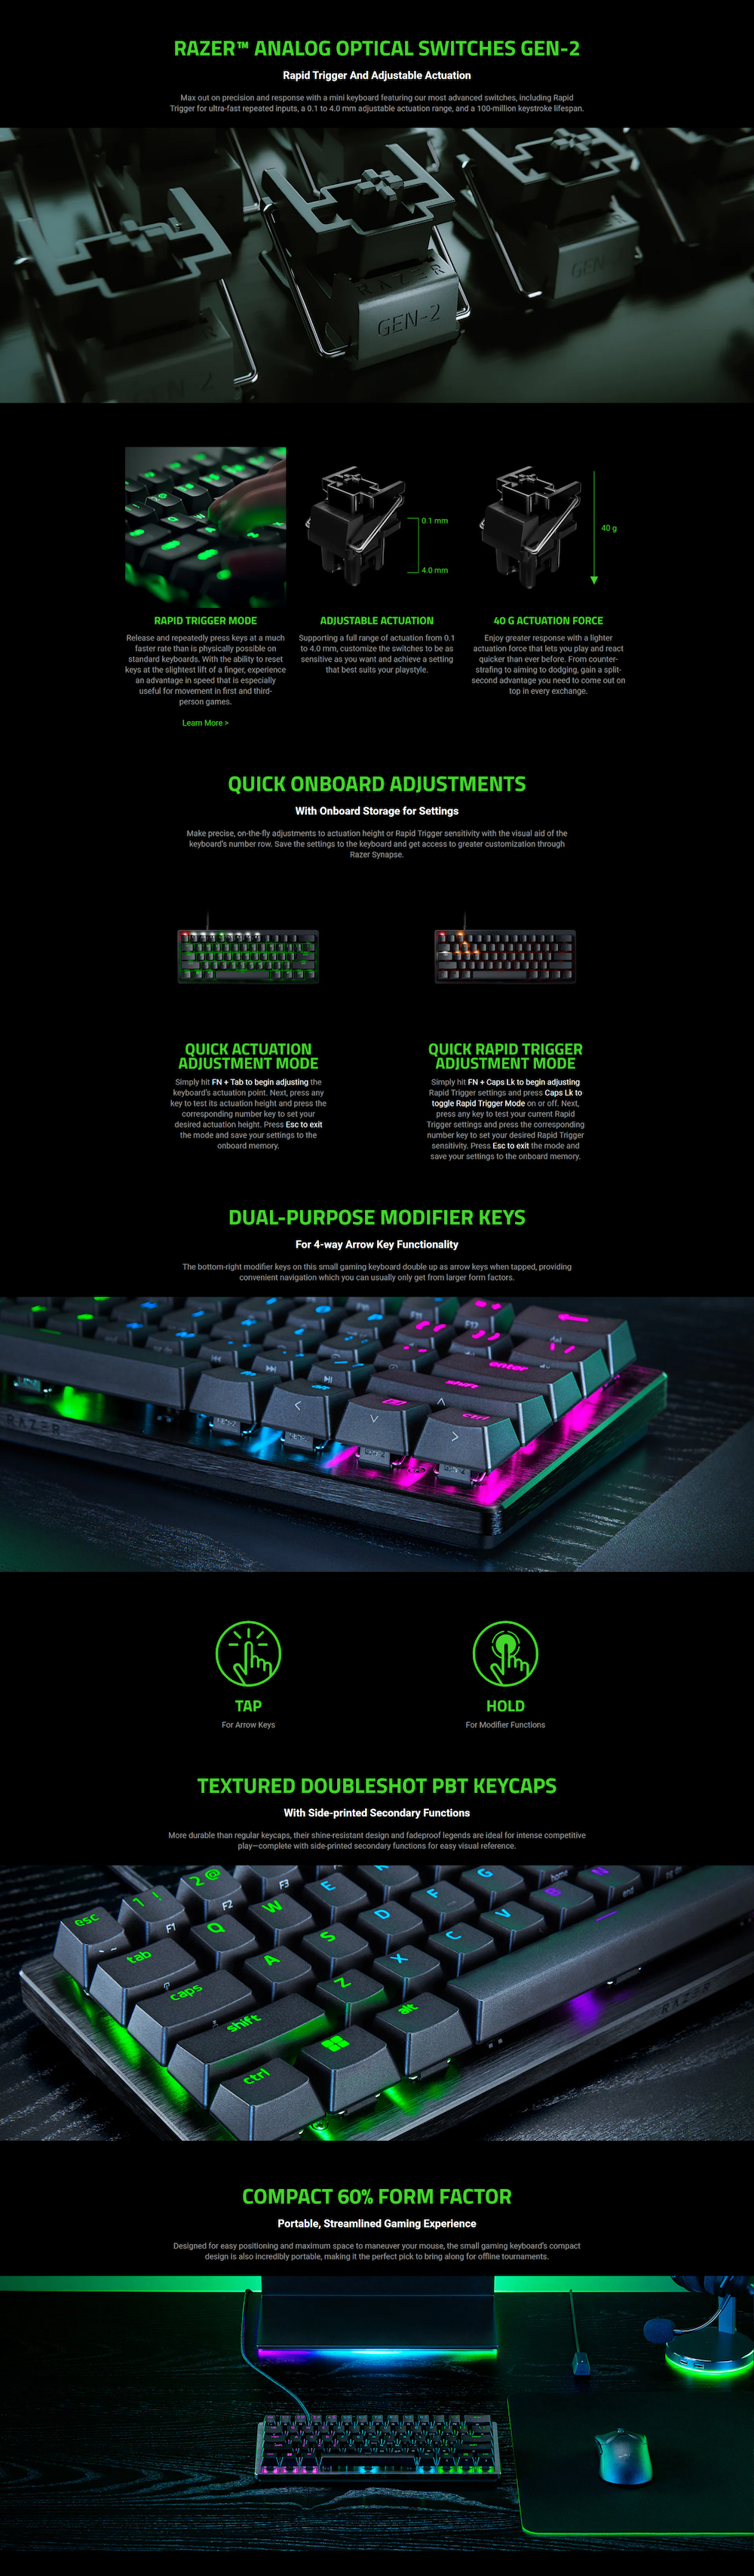 A large marketing image providing additional information about the product Razer Huntsman V3 Pro Mini - 60% Analog Optical eSports Keyboard (White) - Additional alt info not provided